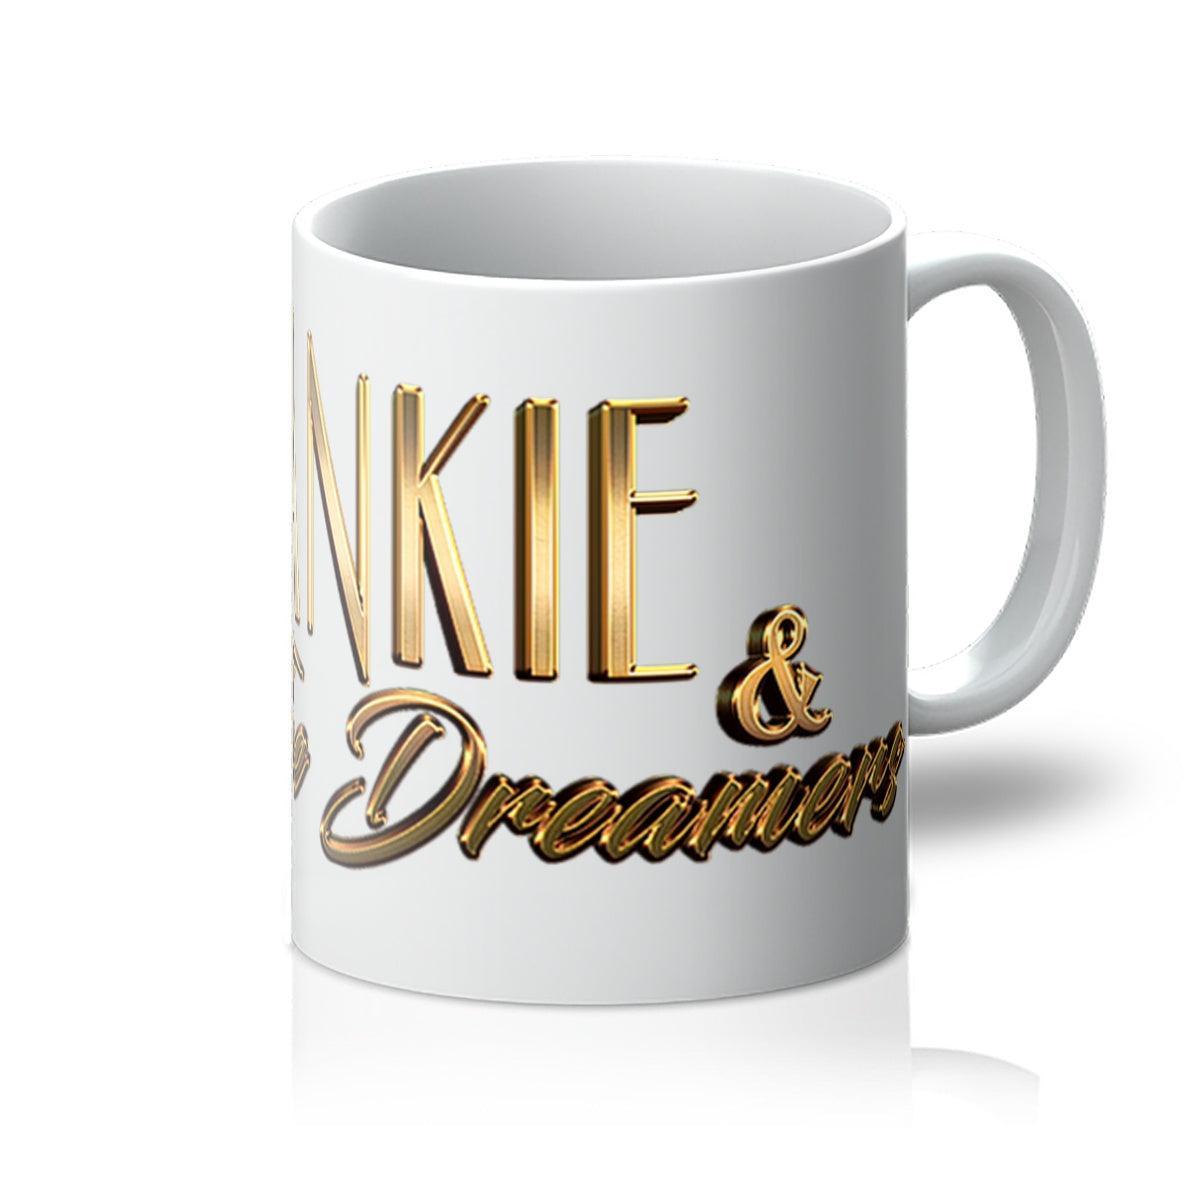 Frankie And The Dreamers Mug | Homeware 11oz White